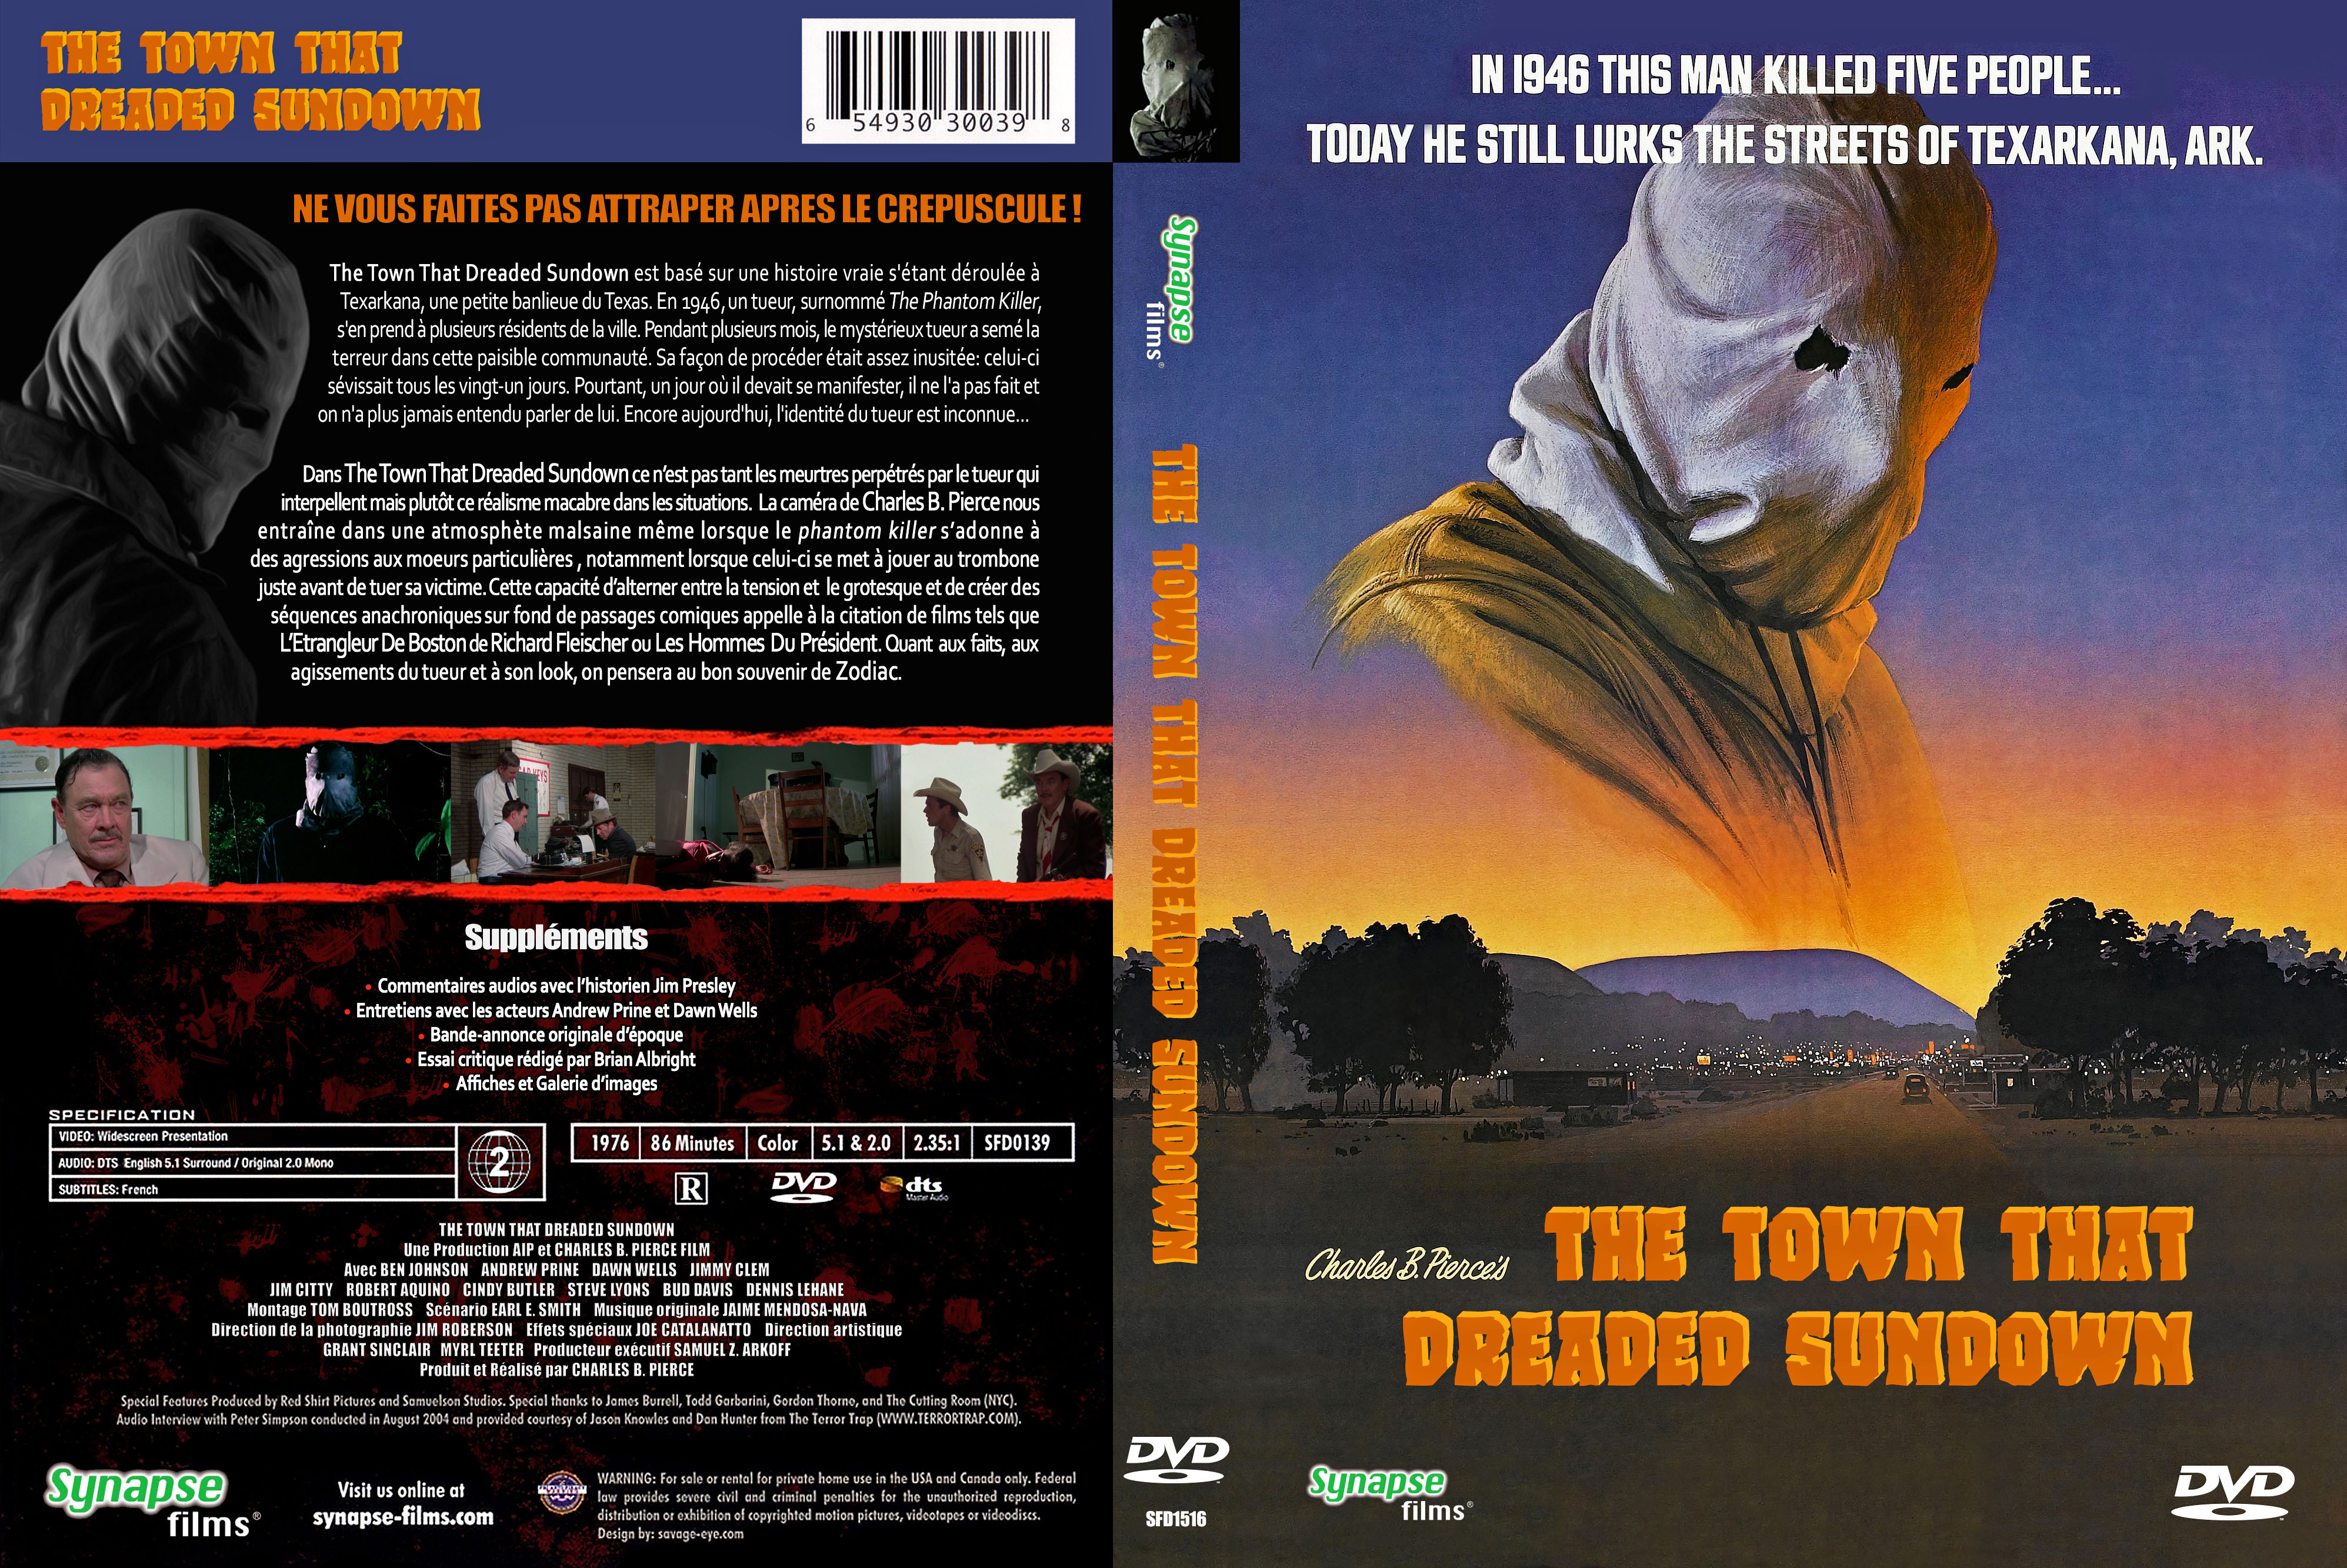 Jaquette DVD The Town that dreaded sundown custom